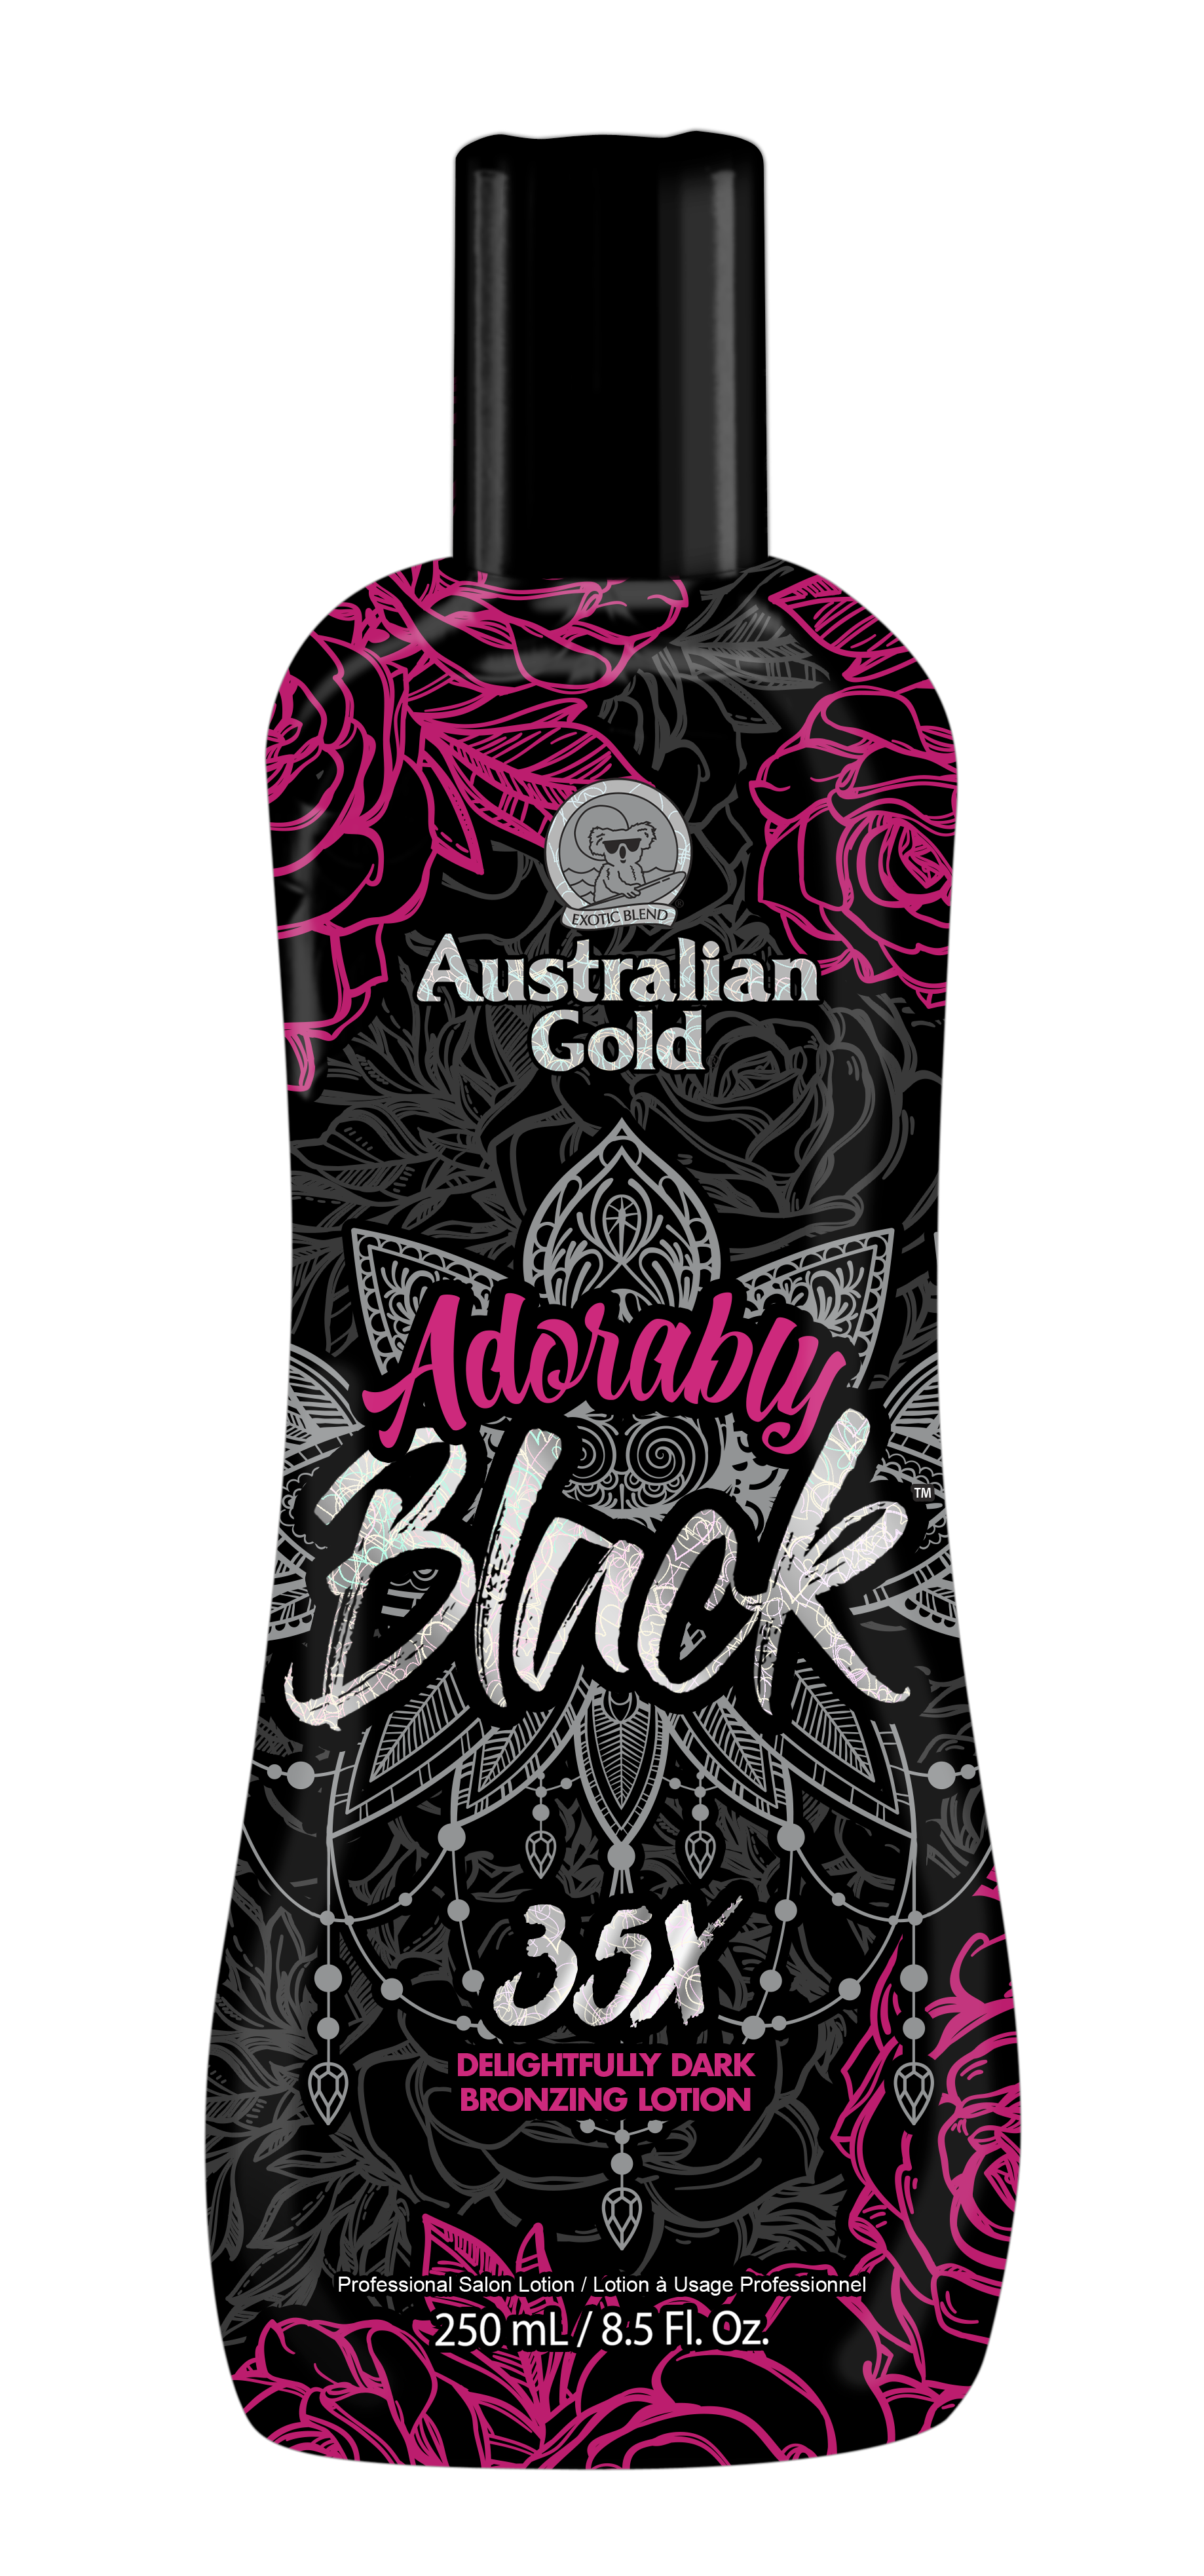 Australian Gold - Adorably Black (250ml)